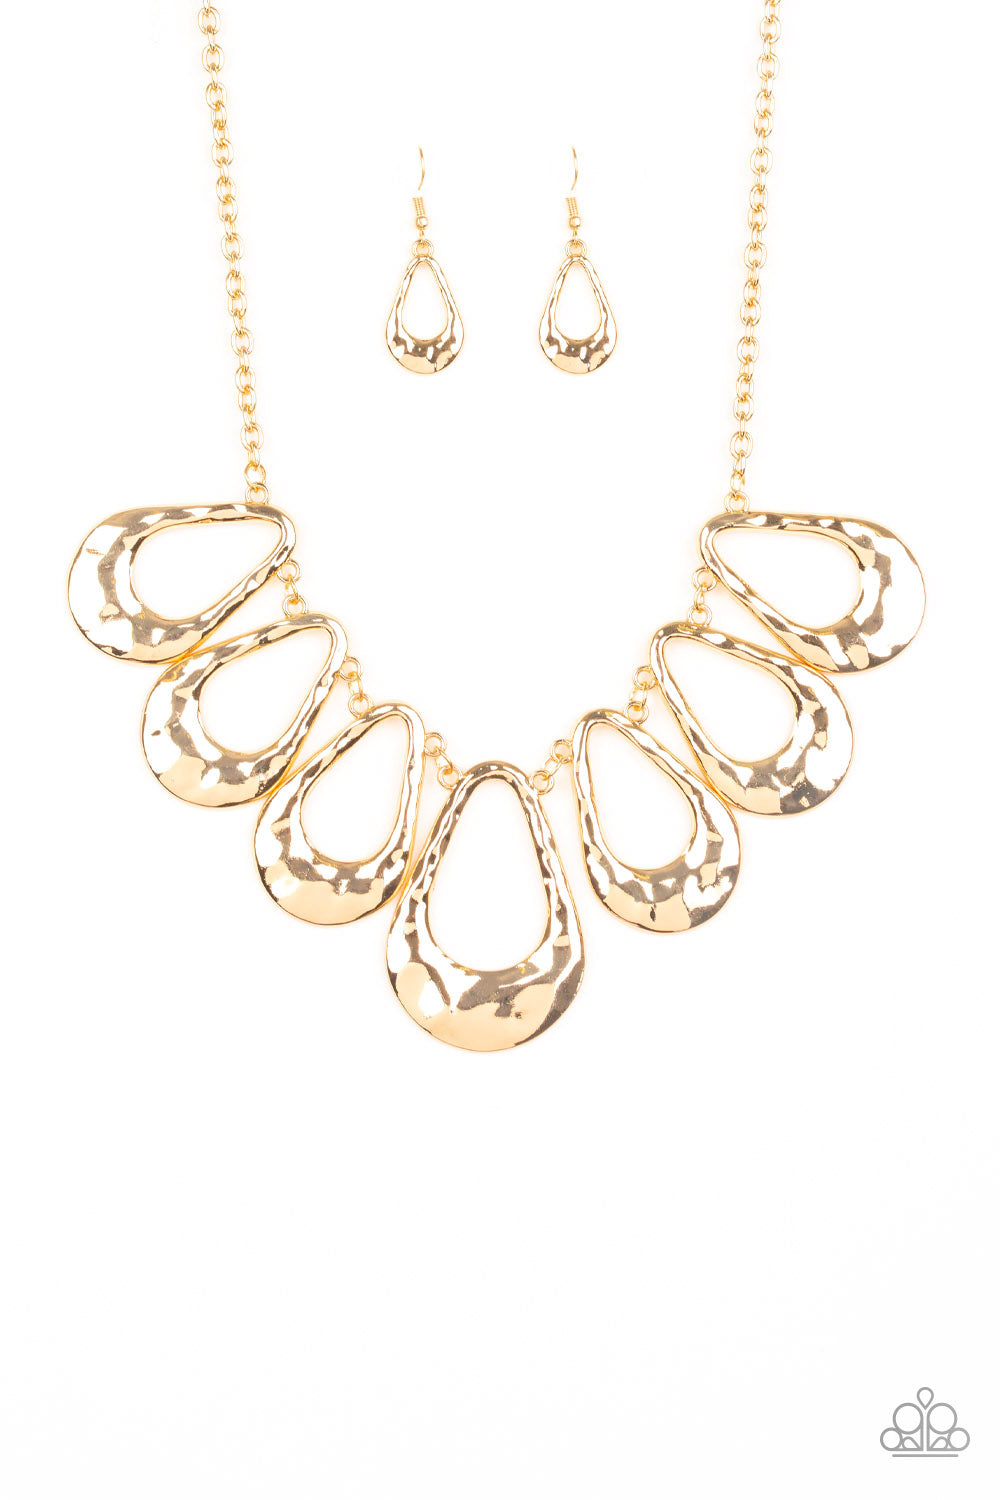 Teardrop Envy - Gold Necklace Set - Princess Glam Shop